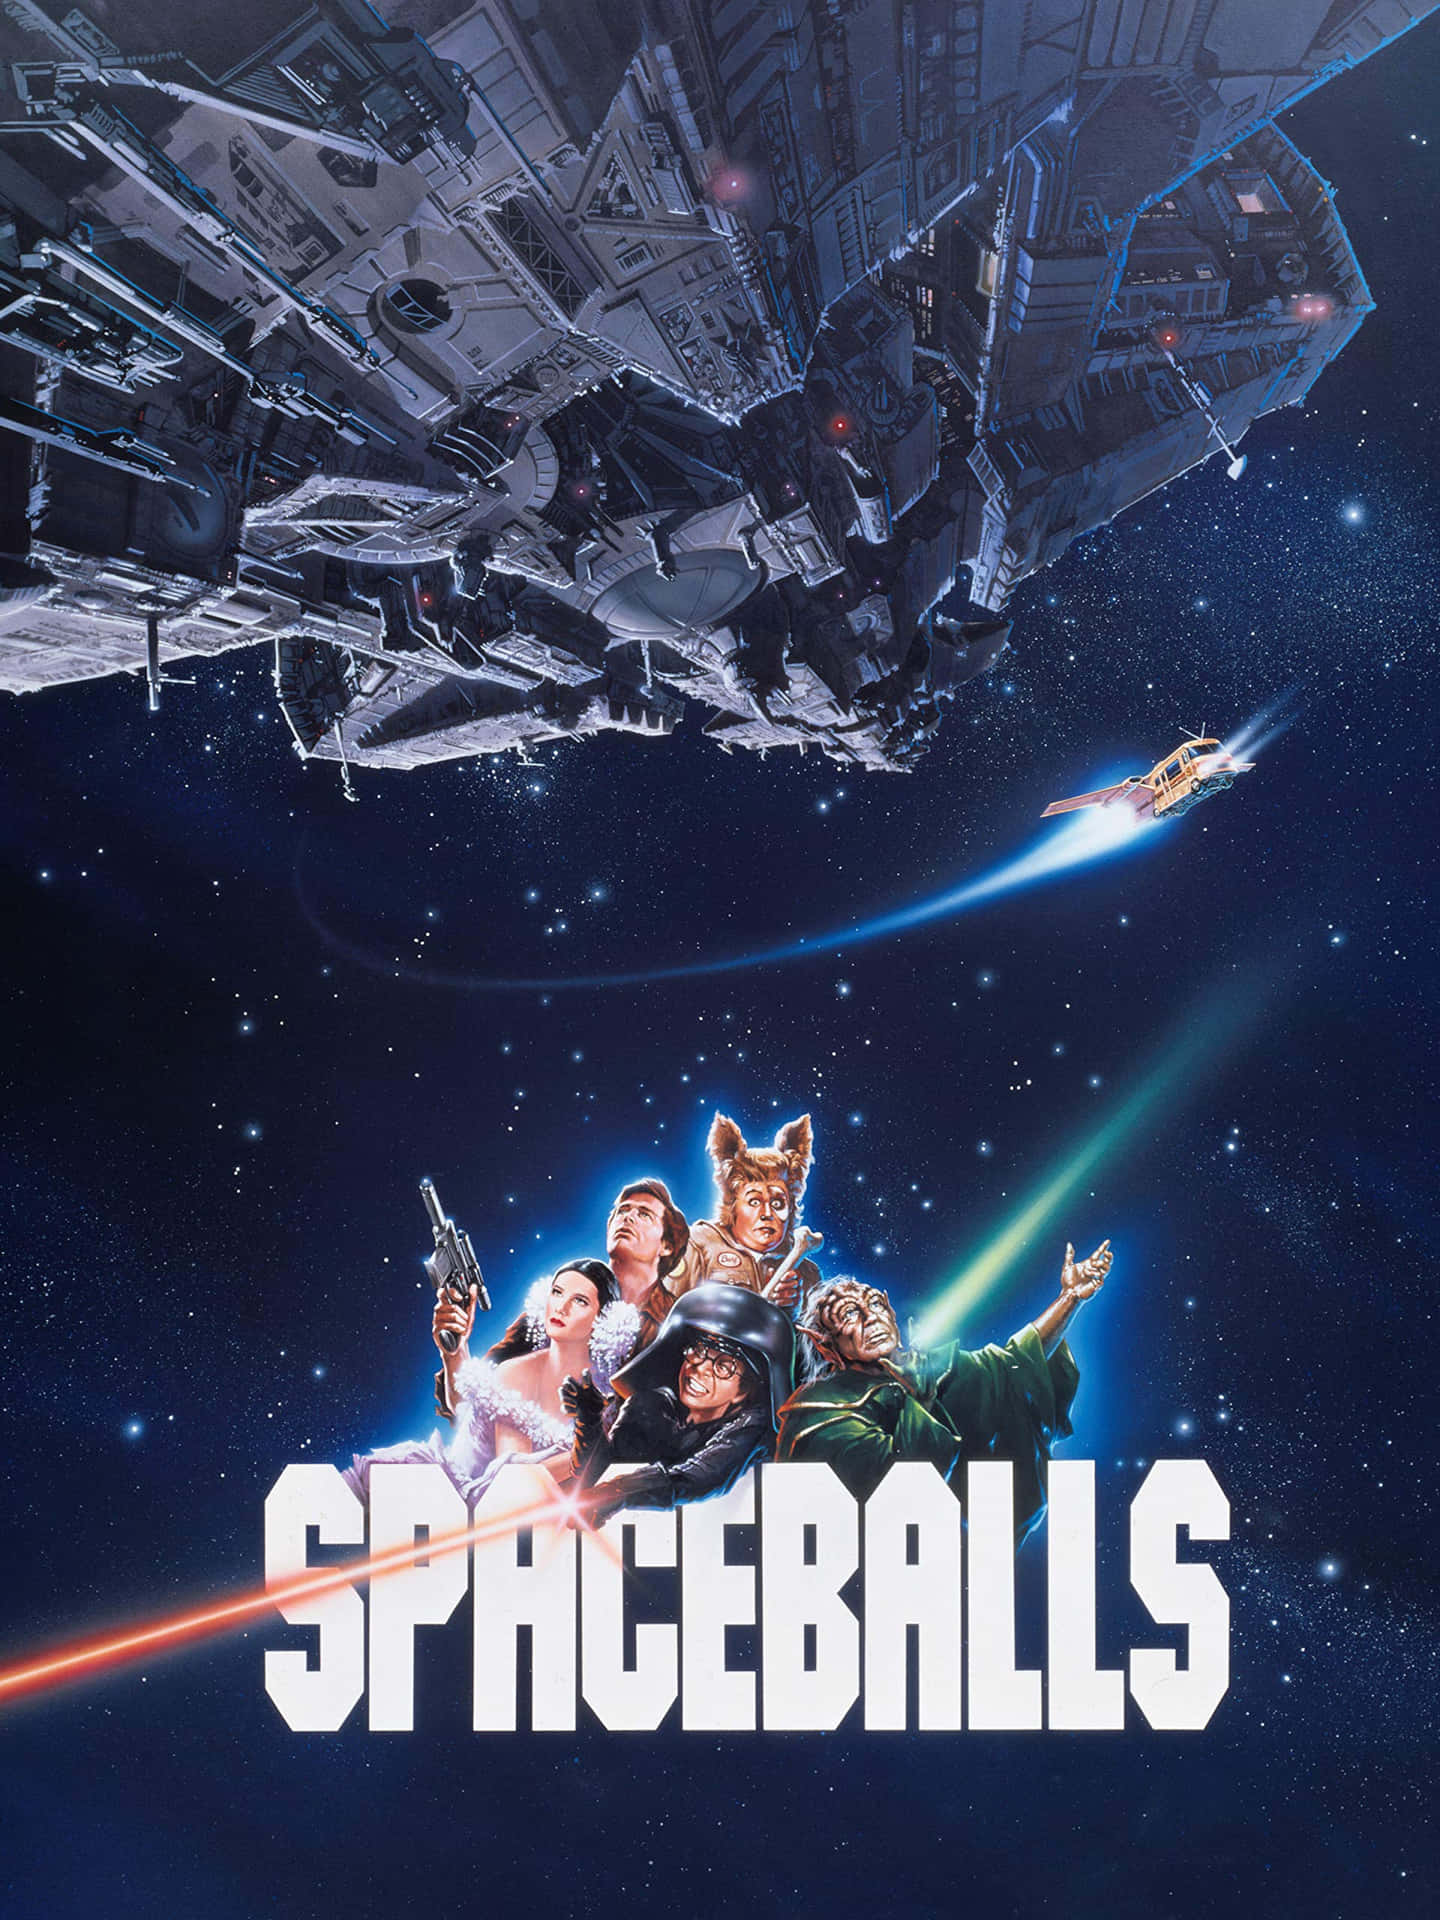 Spaceballs Spaceball One Poster Wallpaper